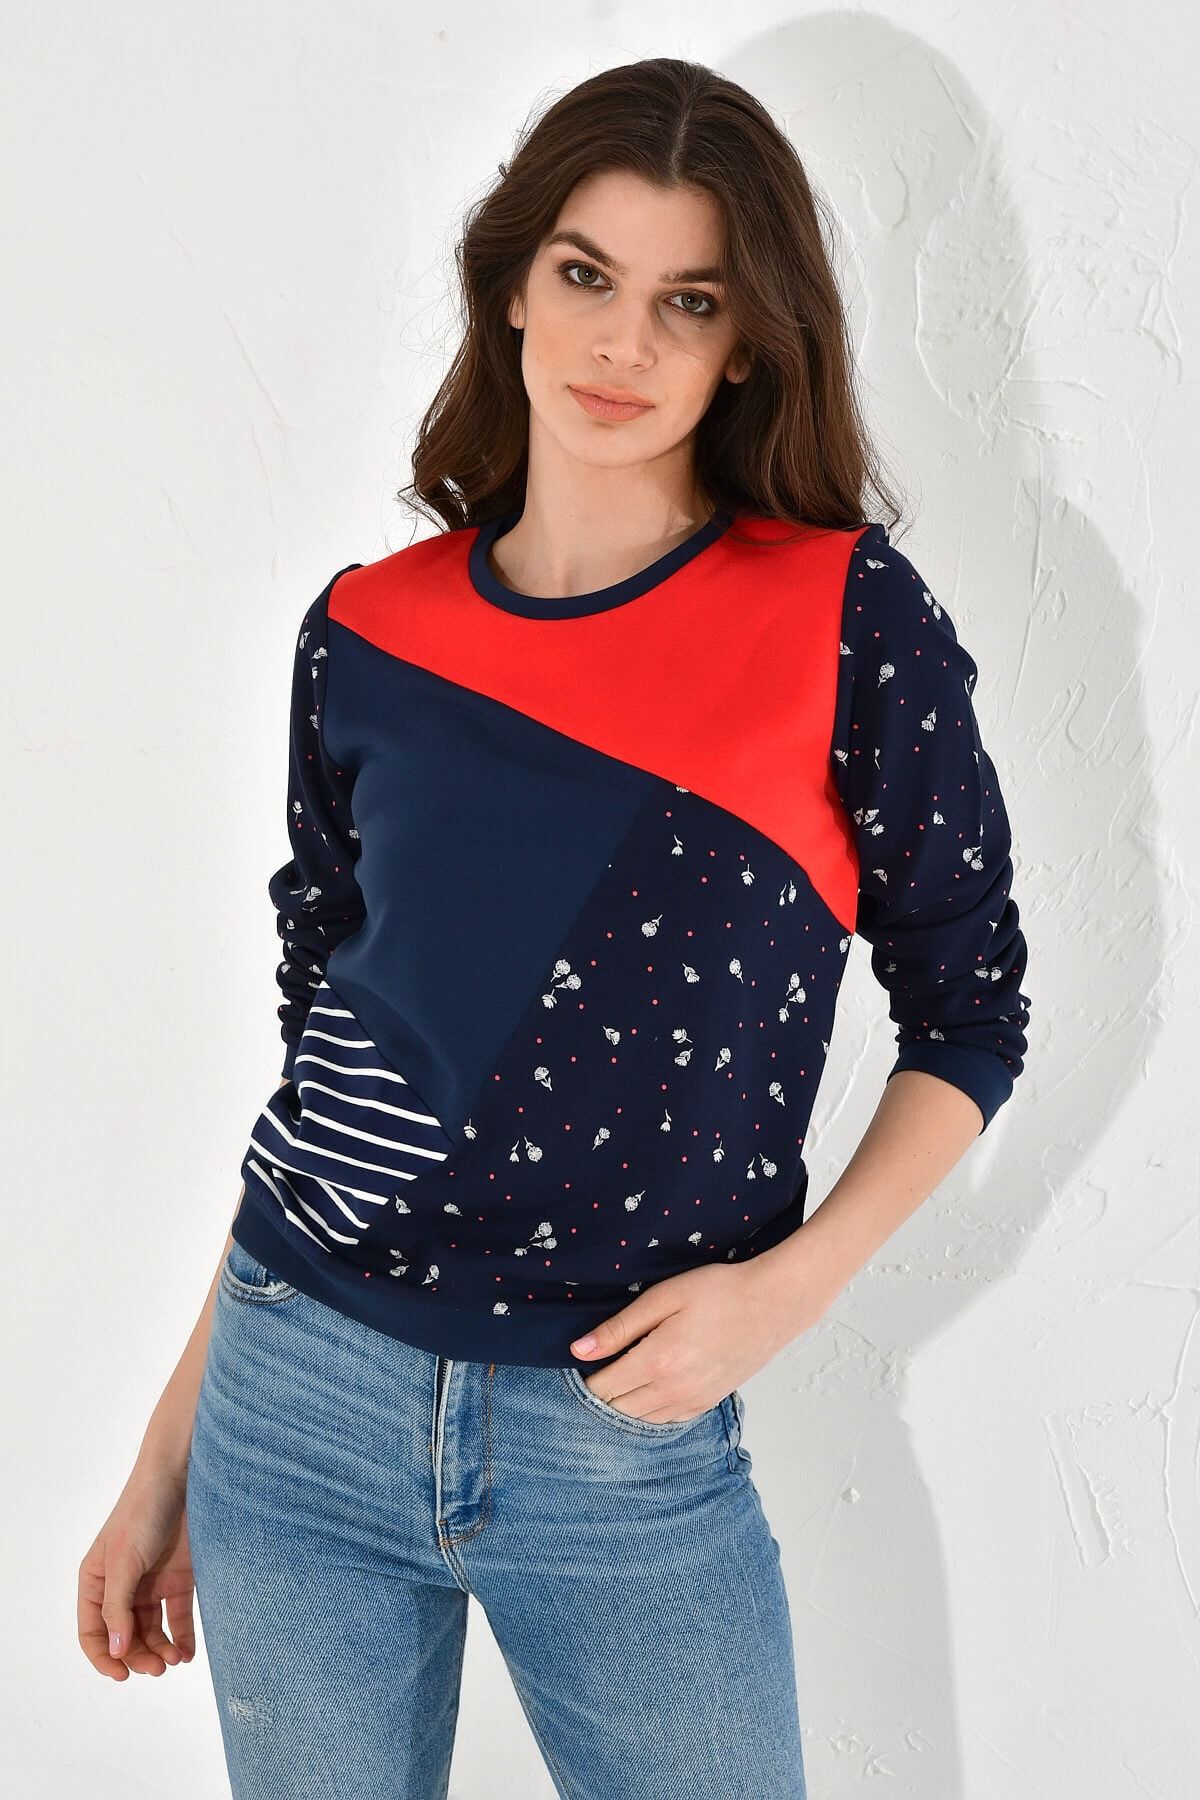 Hanna's Kadın Lacivert Asitmetri Detaylı Sweatshirt